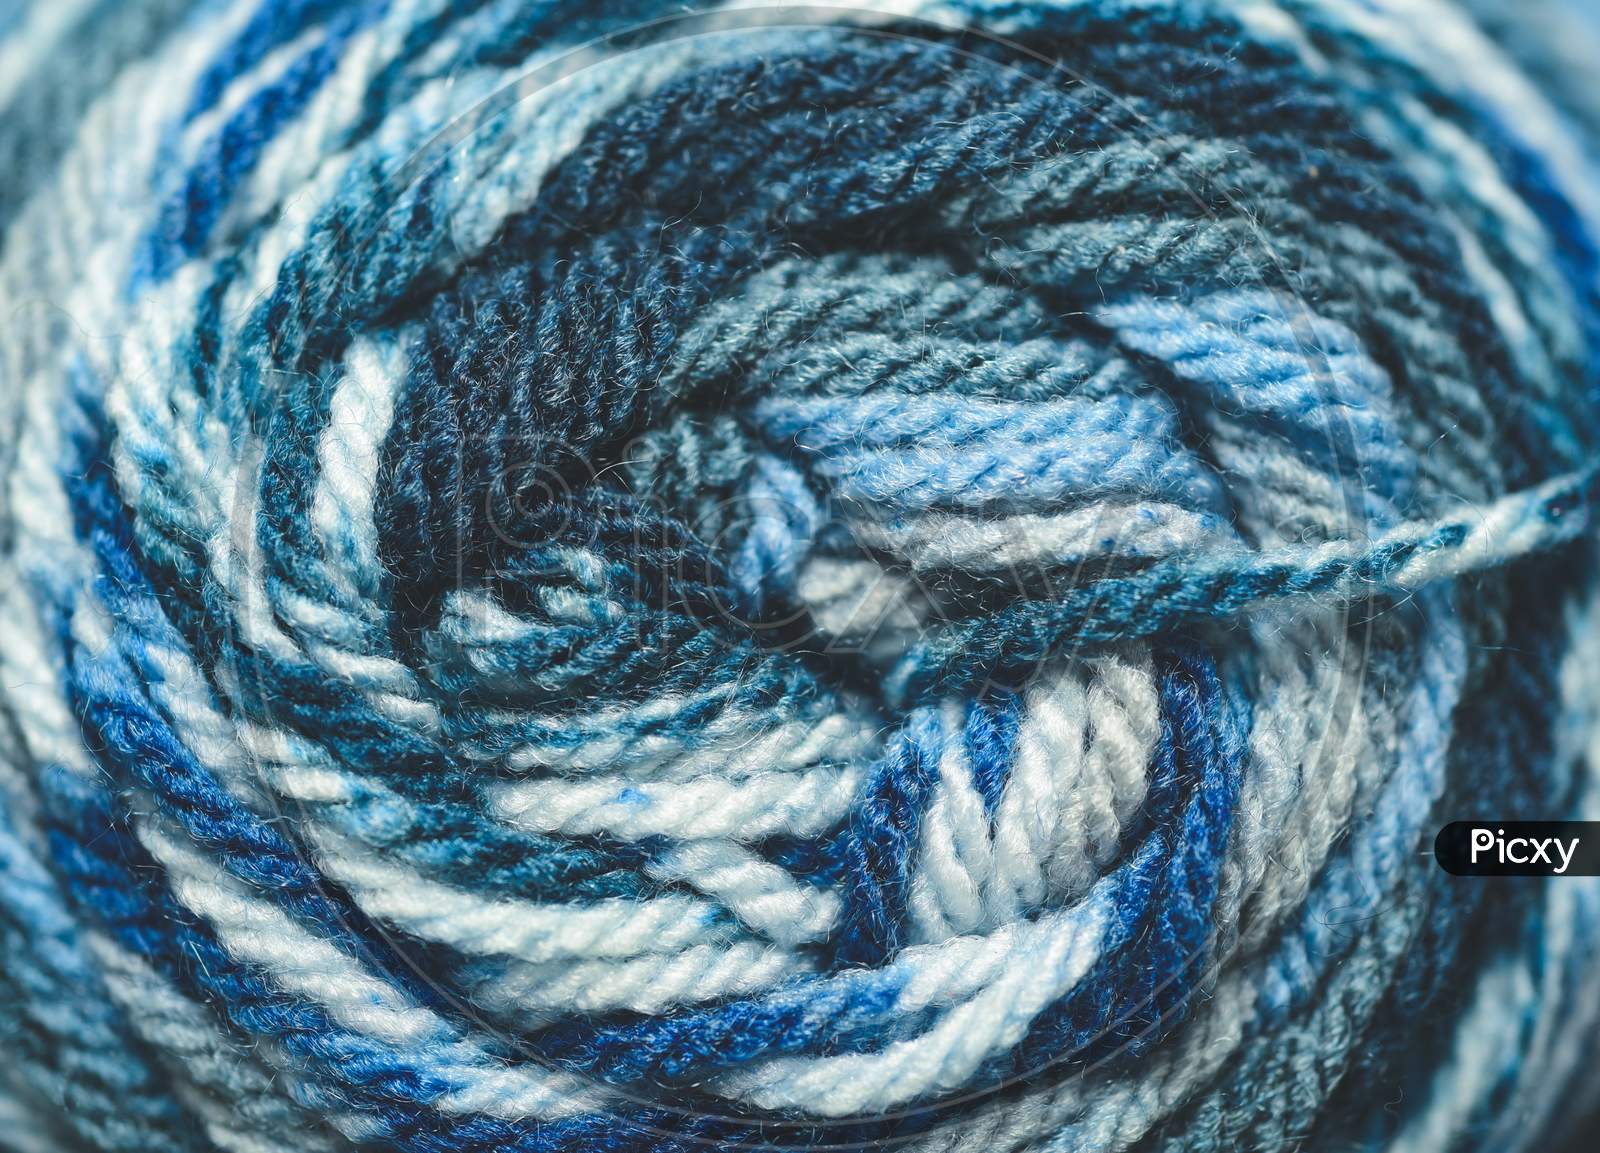 Macro Close Up Of Blue Tones Worsted Yarn